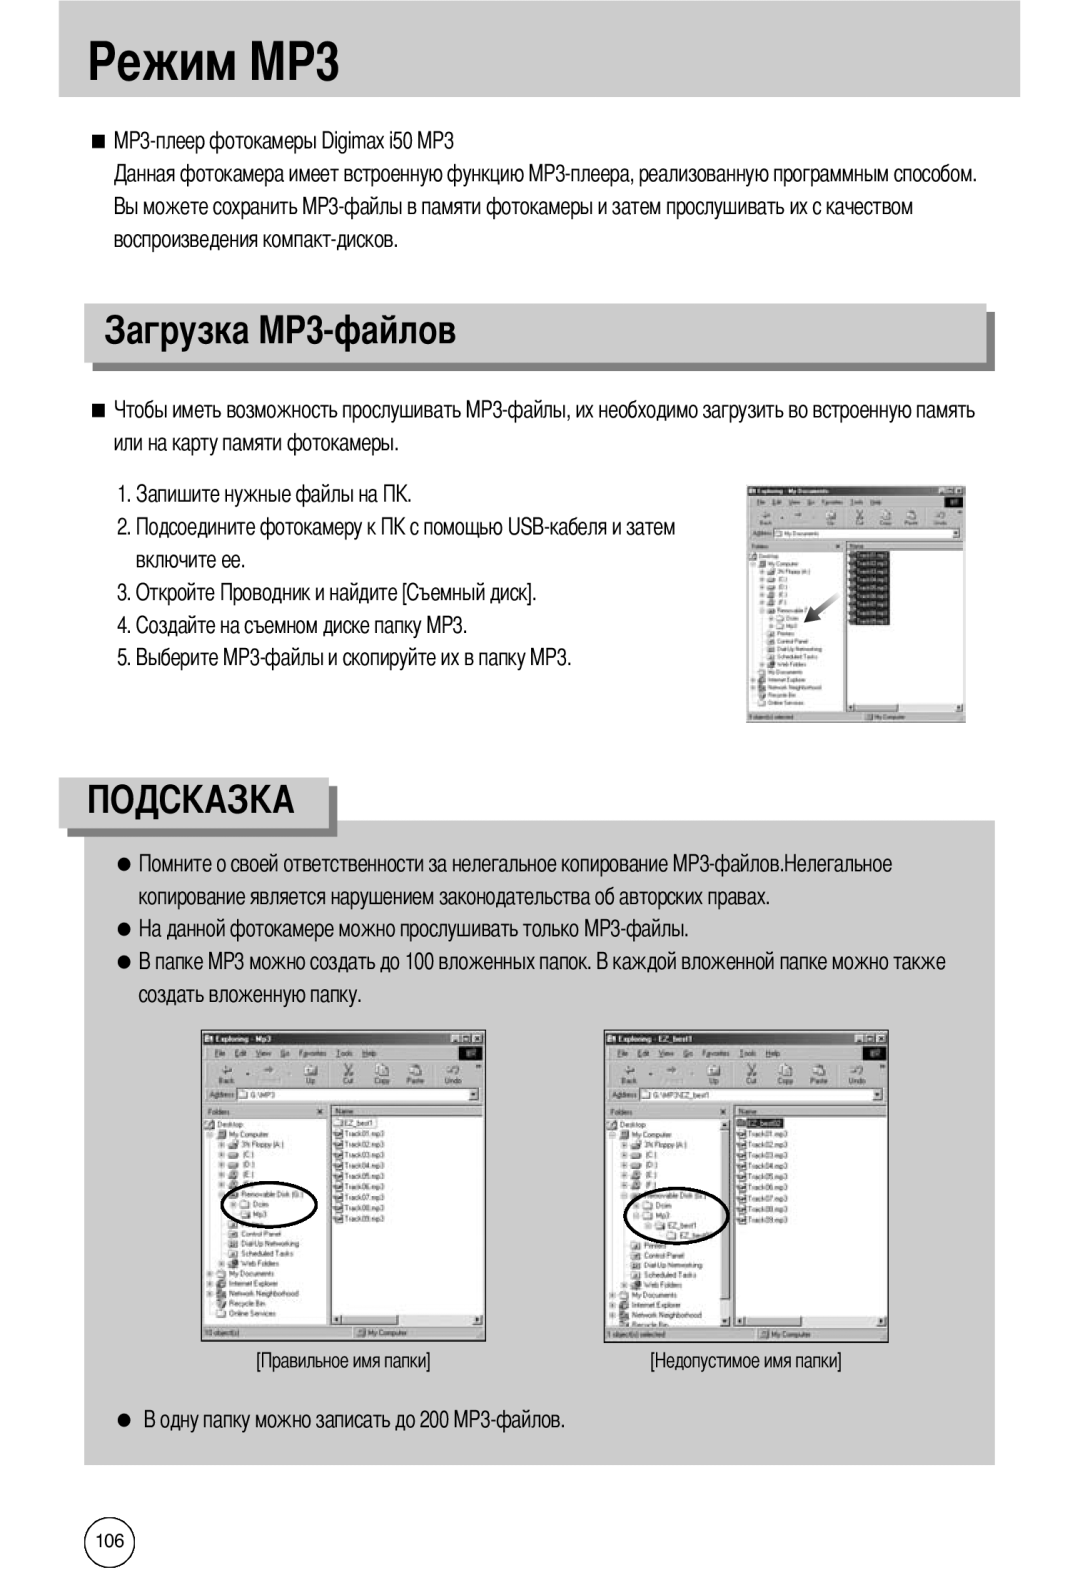 Samsung EC-I50ZZBBA/DE, EC-I50ZZBBA/FR manual ежим MP3, MP3-плеер фотокамеры Digimax i50 MP3 воспроизведения компакт-дисков 